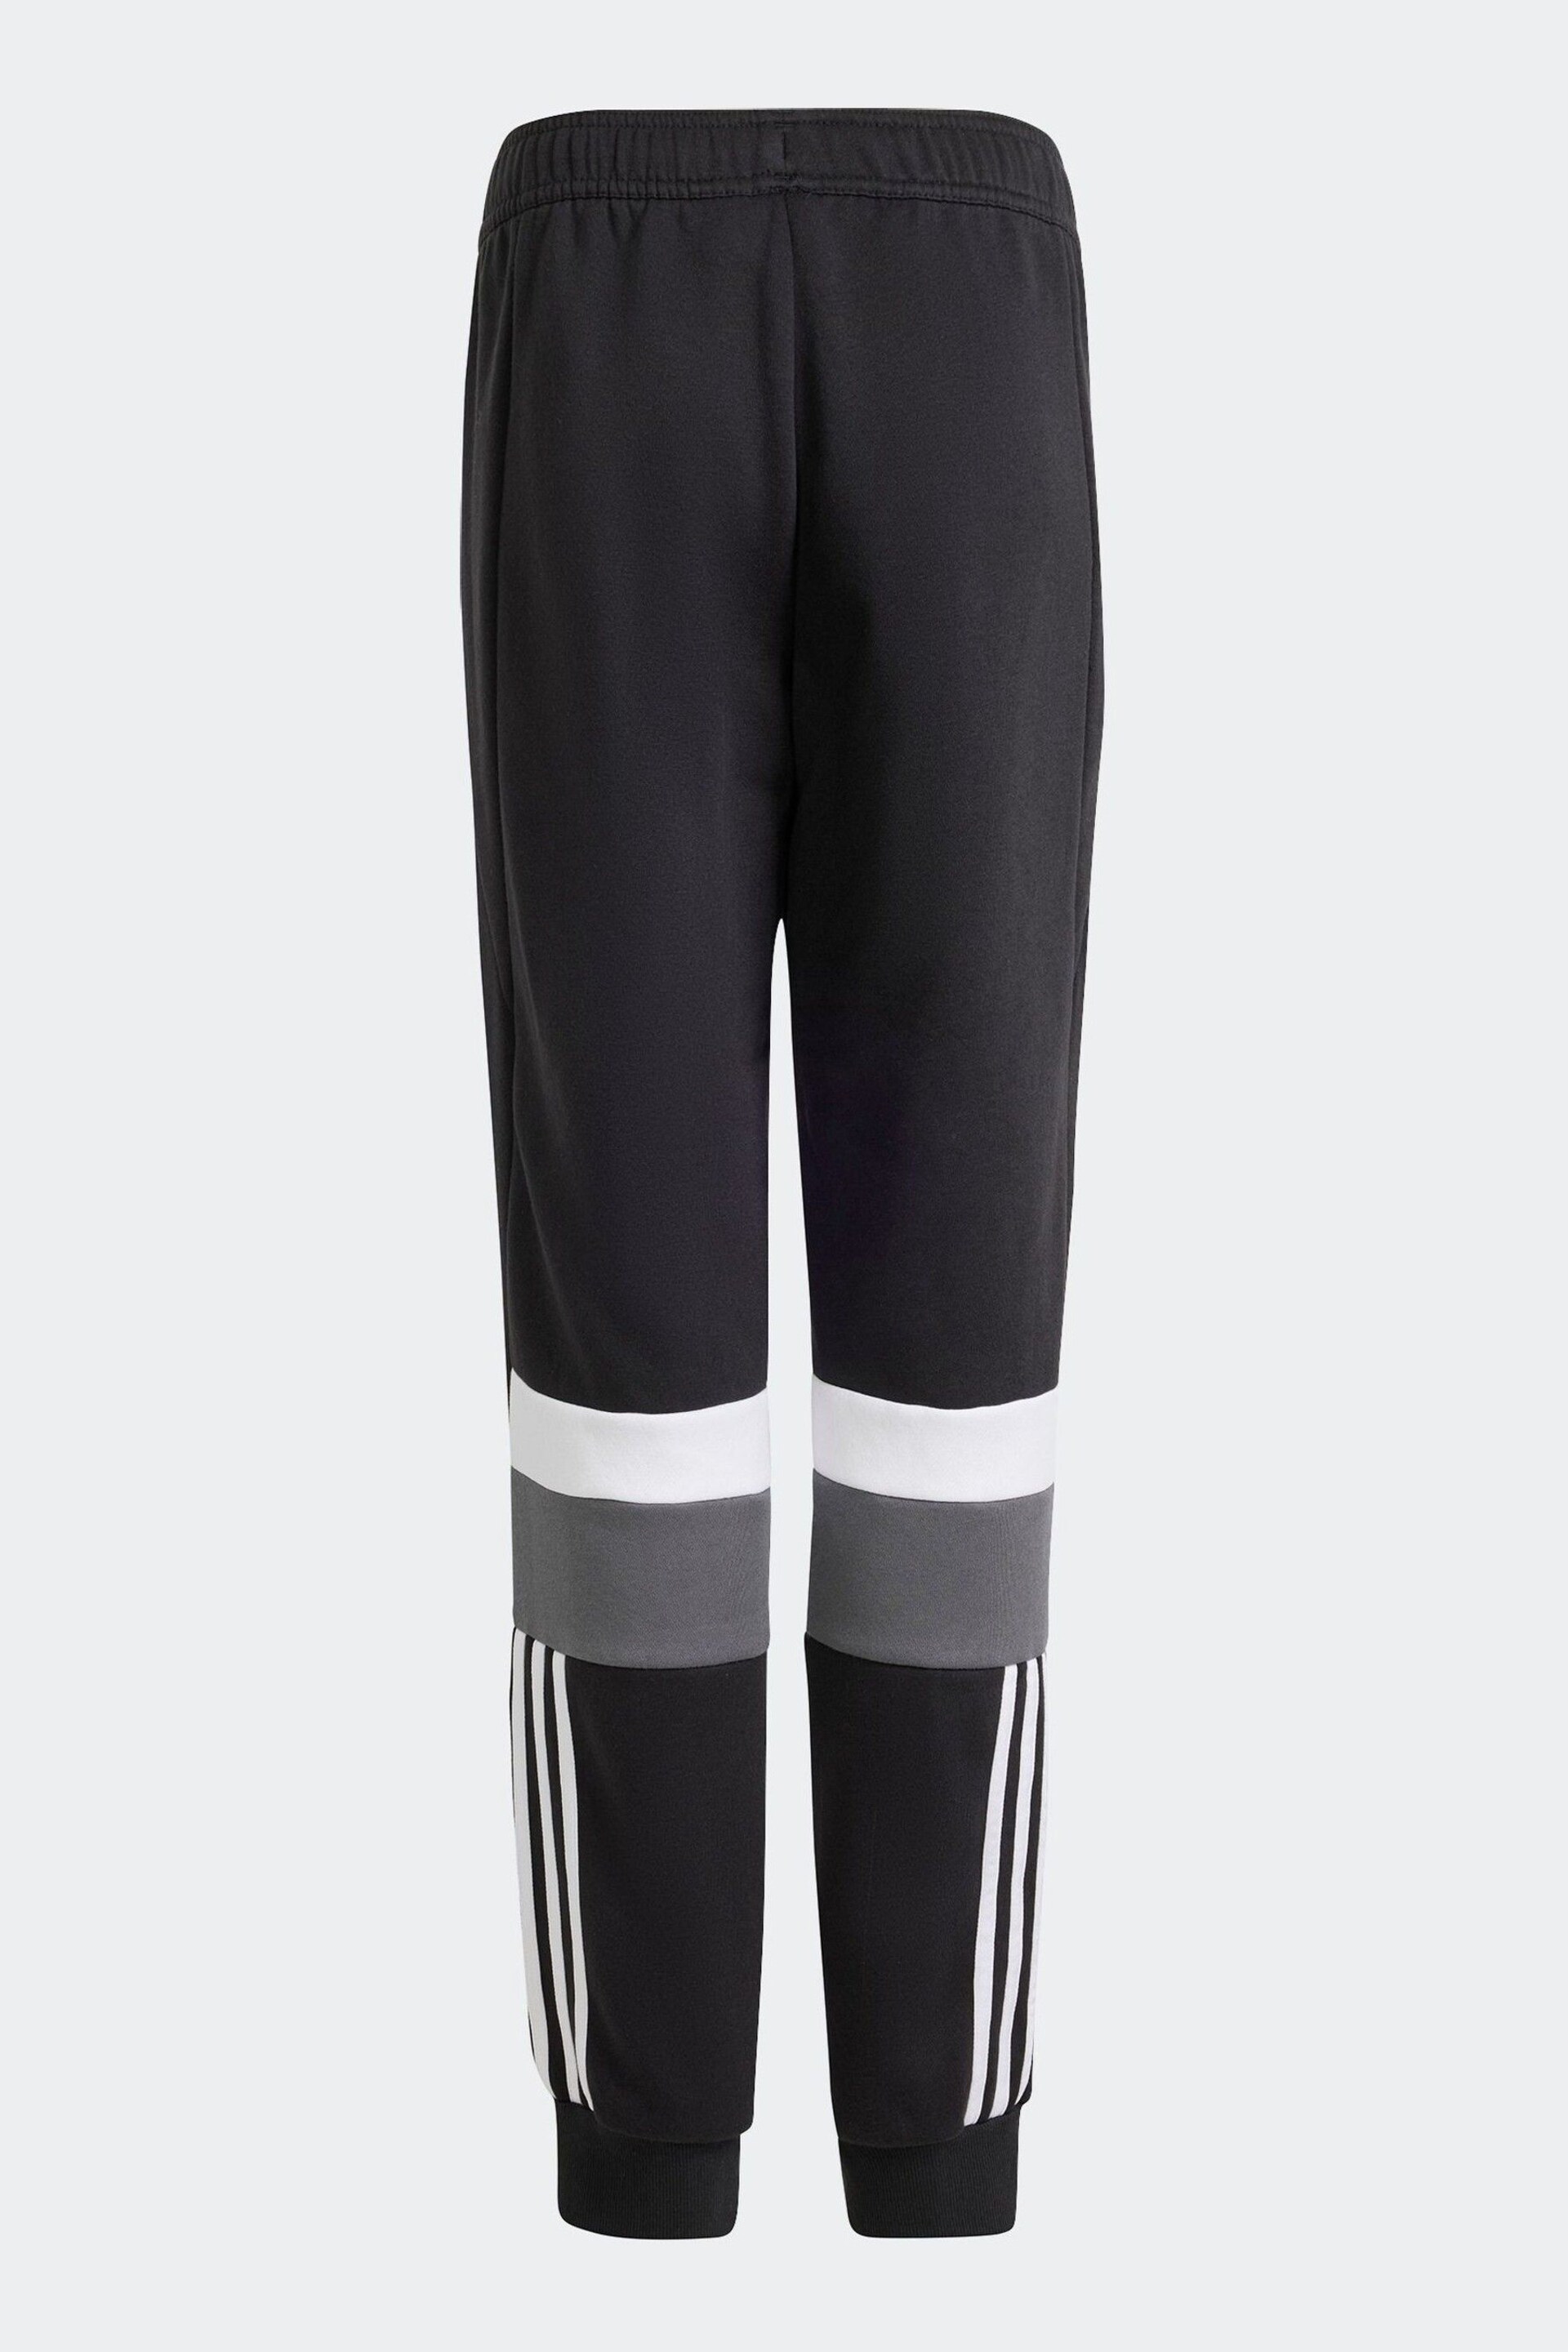 adidas Black Kids Sportswear Tiberio 3 Stripes Colourblock Fleece Joggers - Image 2 of 6